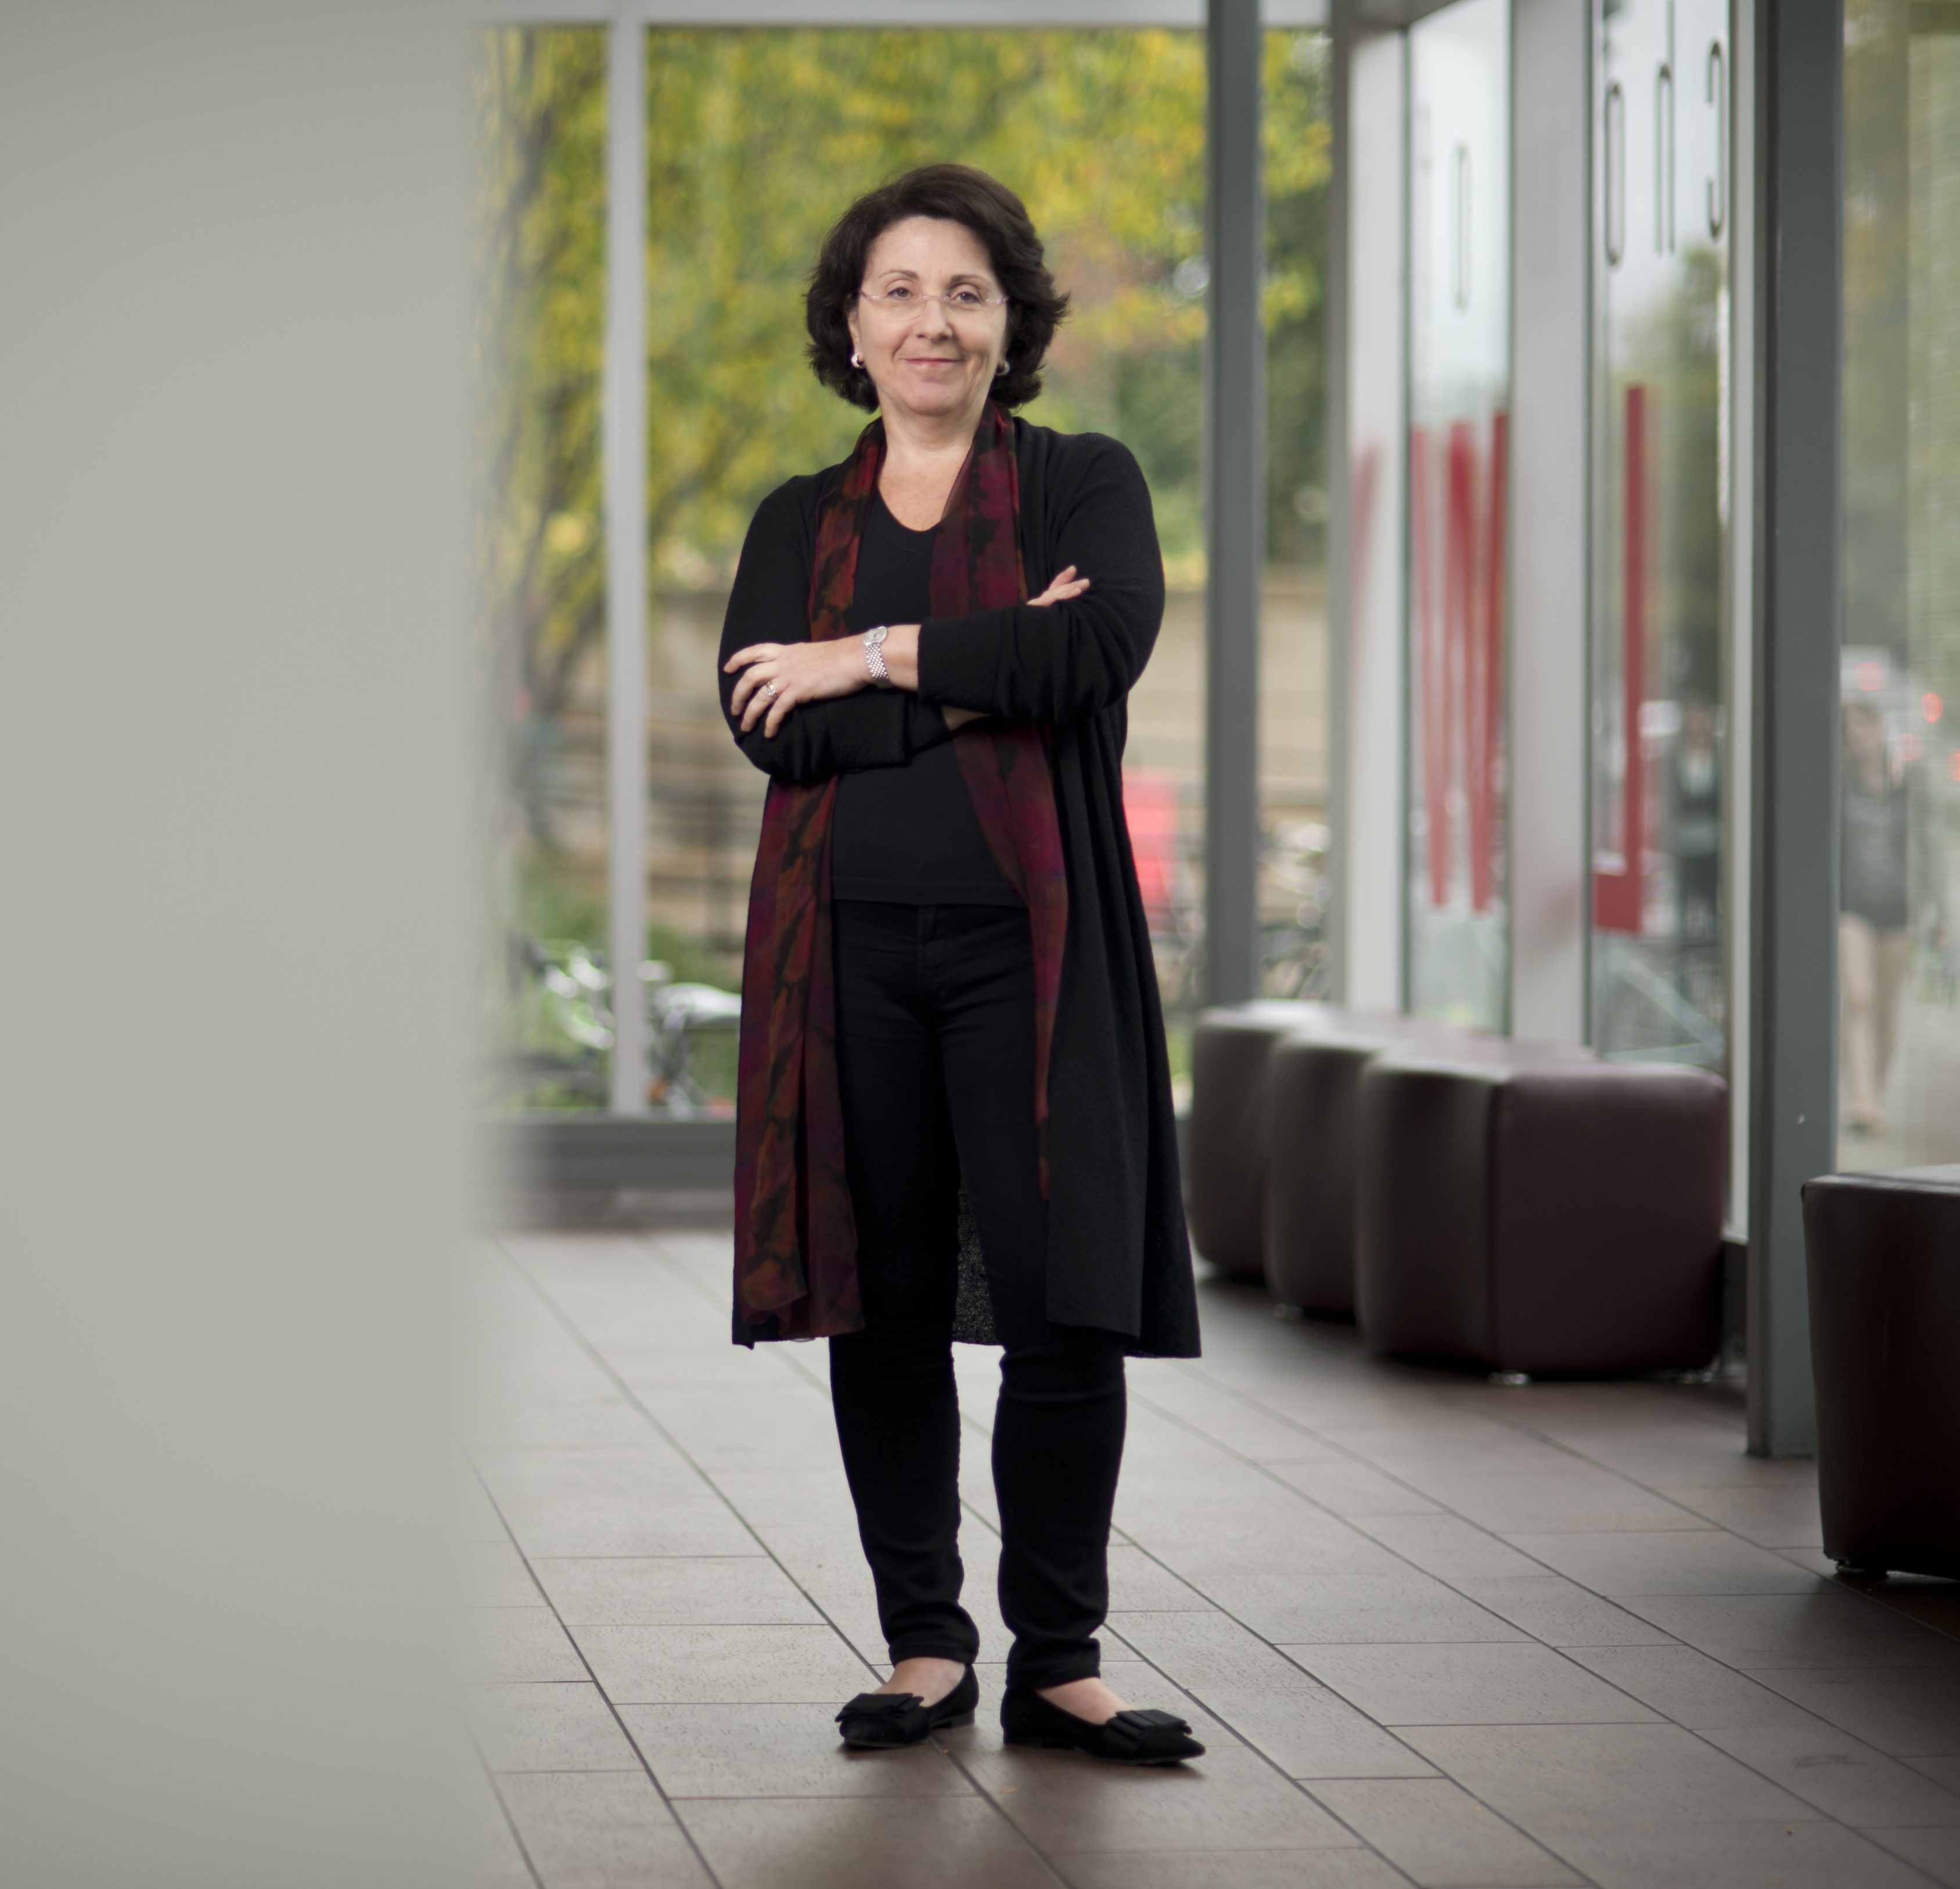 Prof. Lisa Feldman Barrett featured in NPR